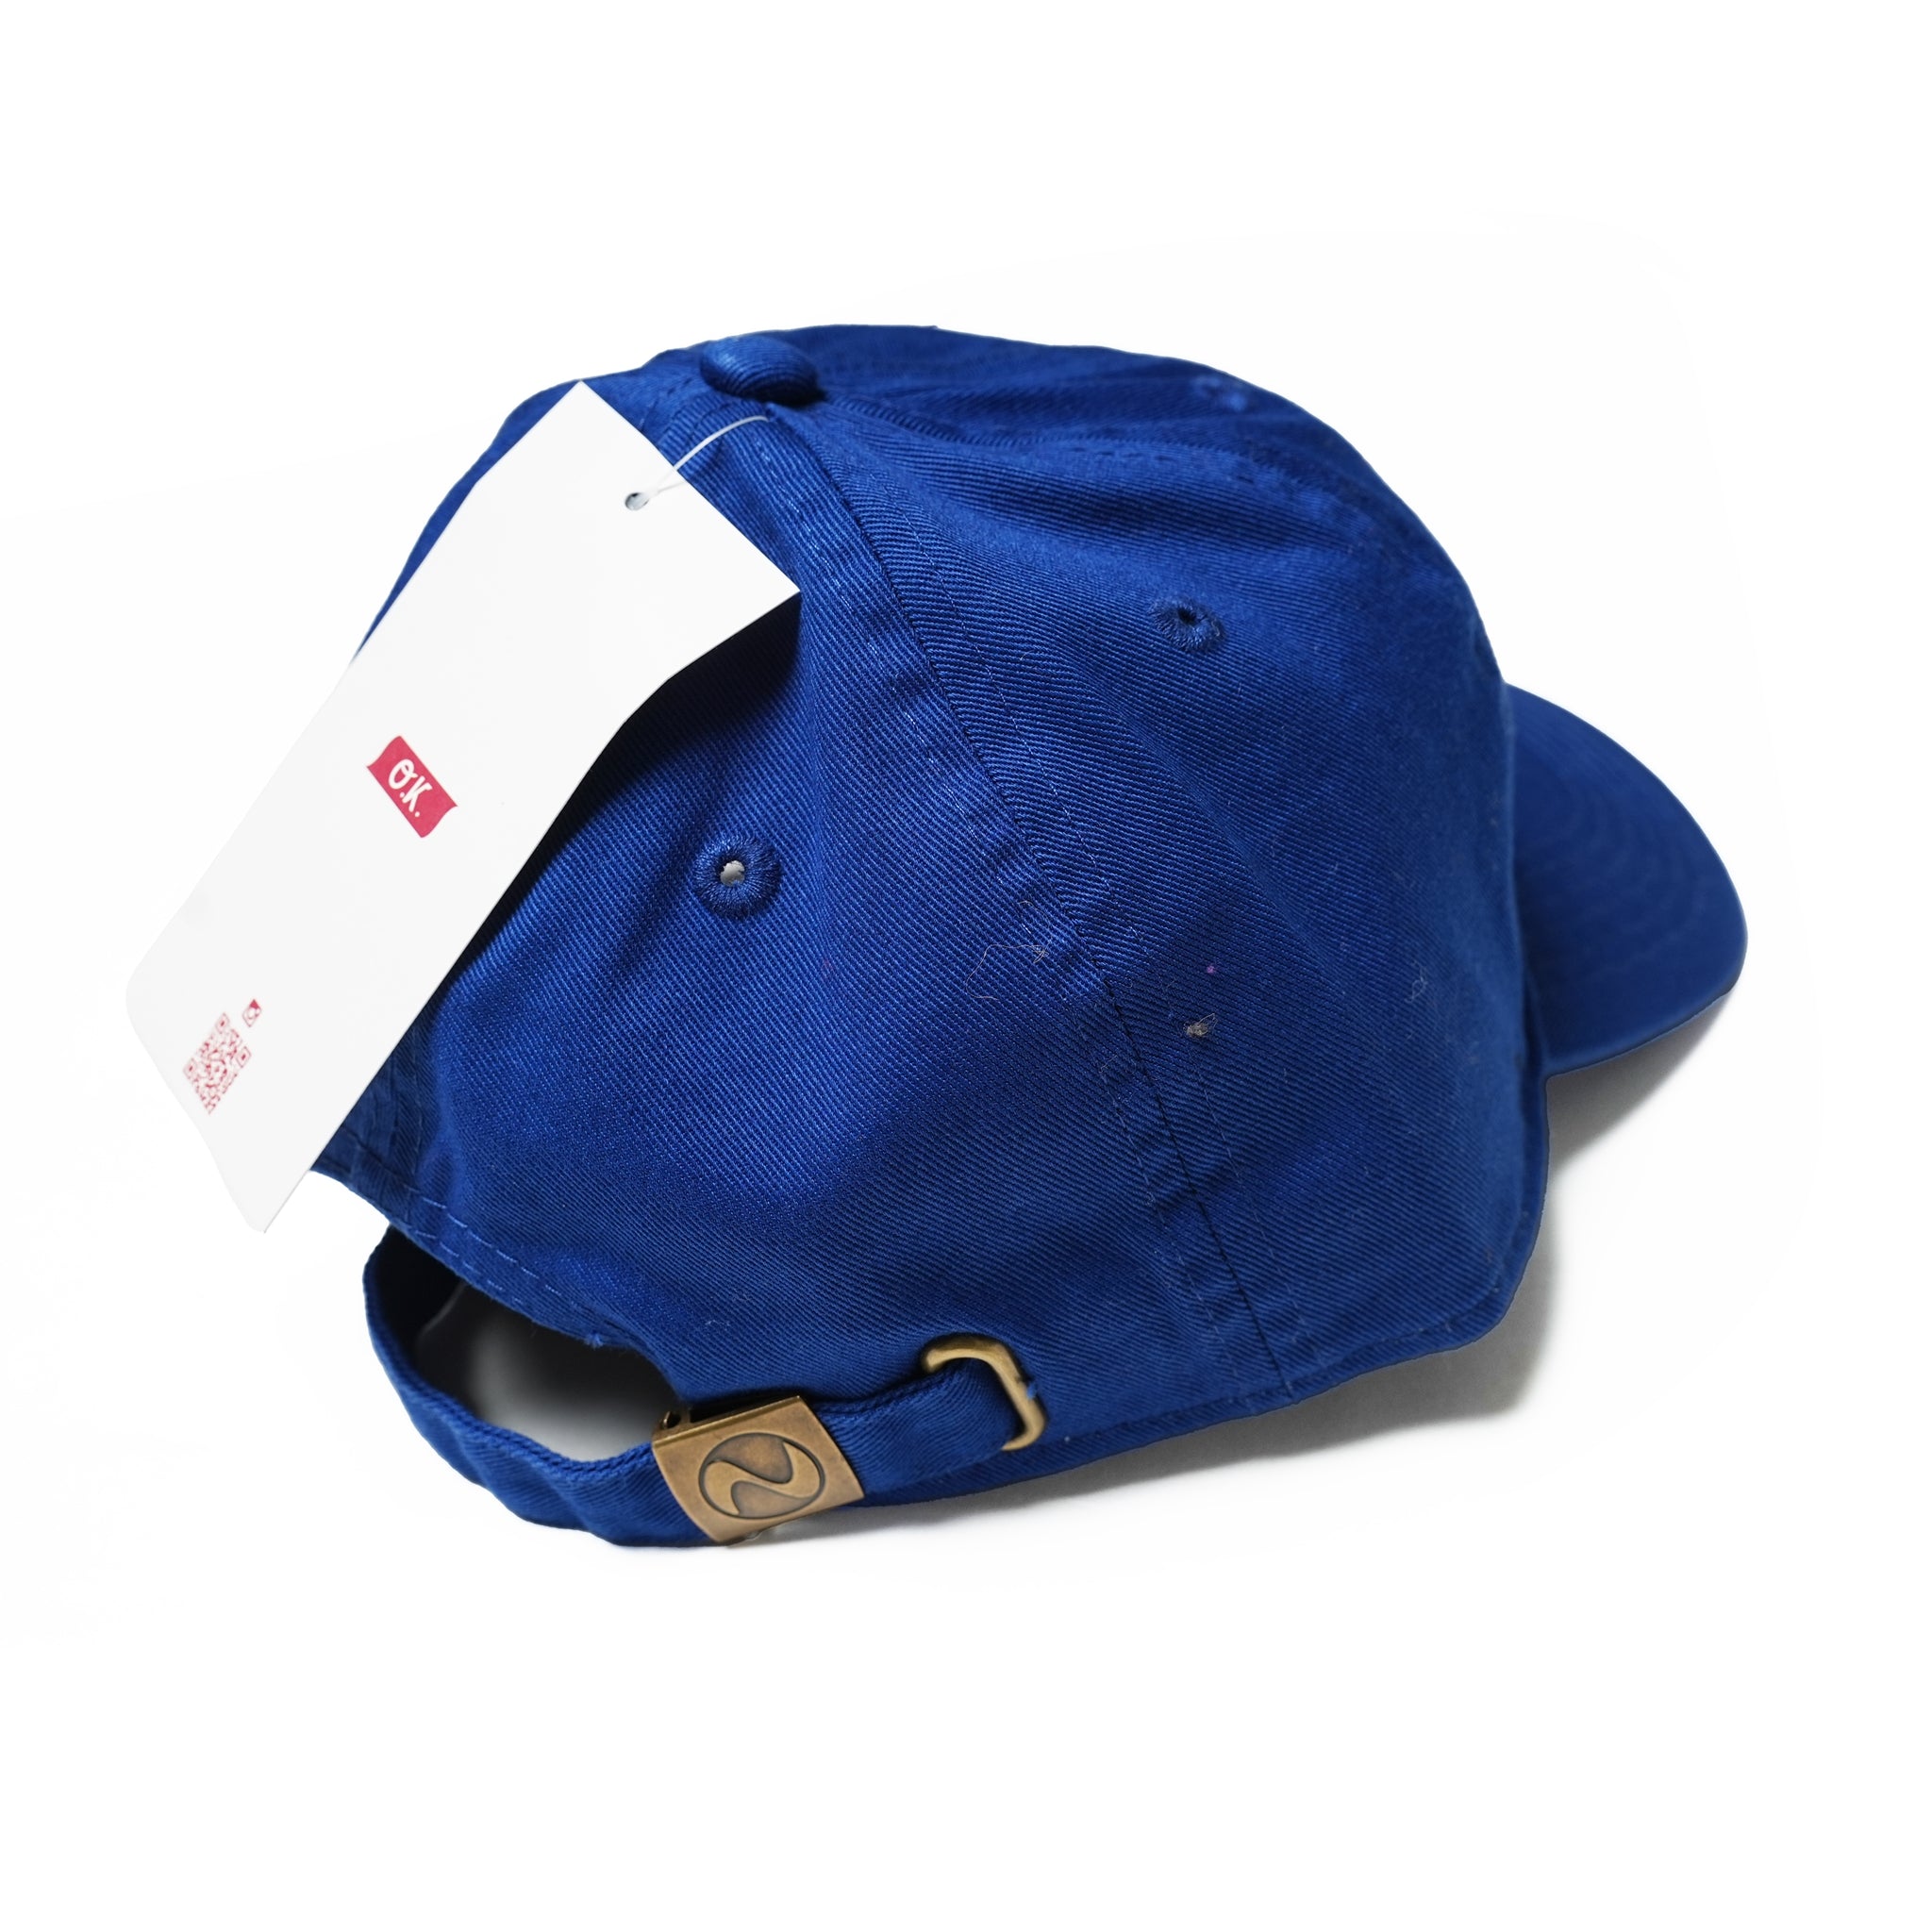 No:ok241-205 | Name:posse cap | Color:Blue/Brown/Purple【OK_オーケー】